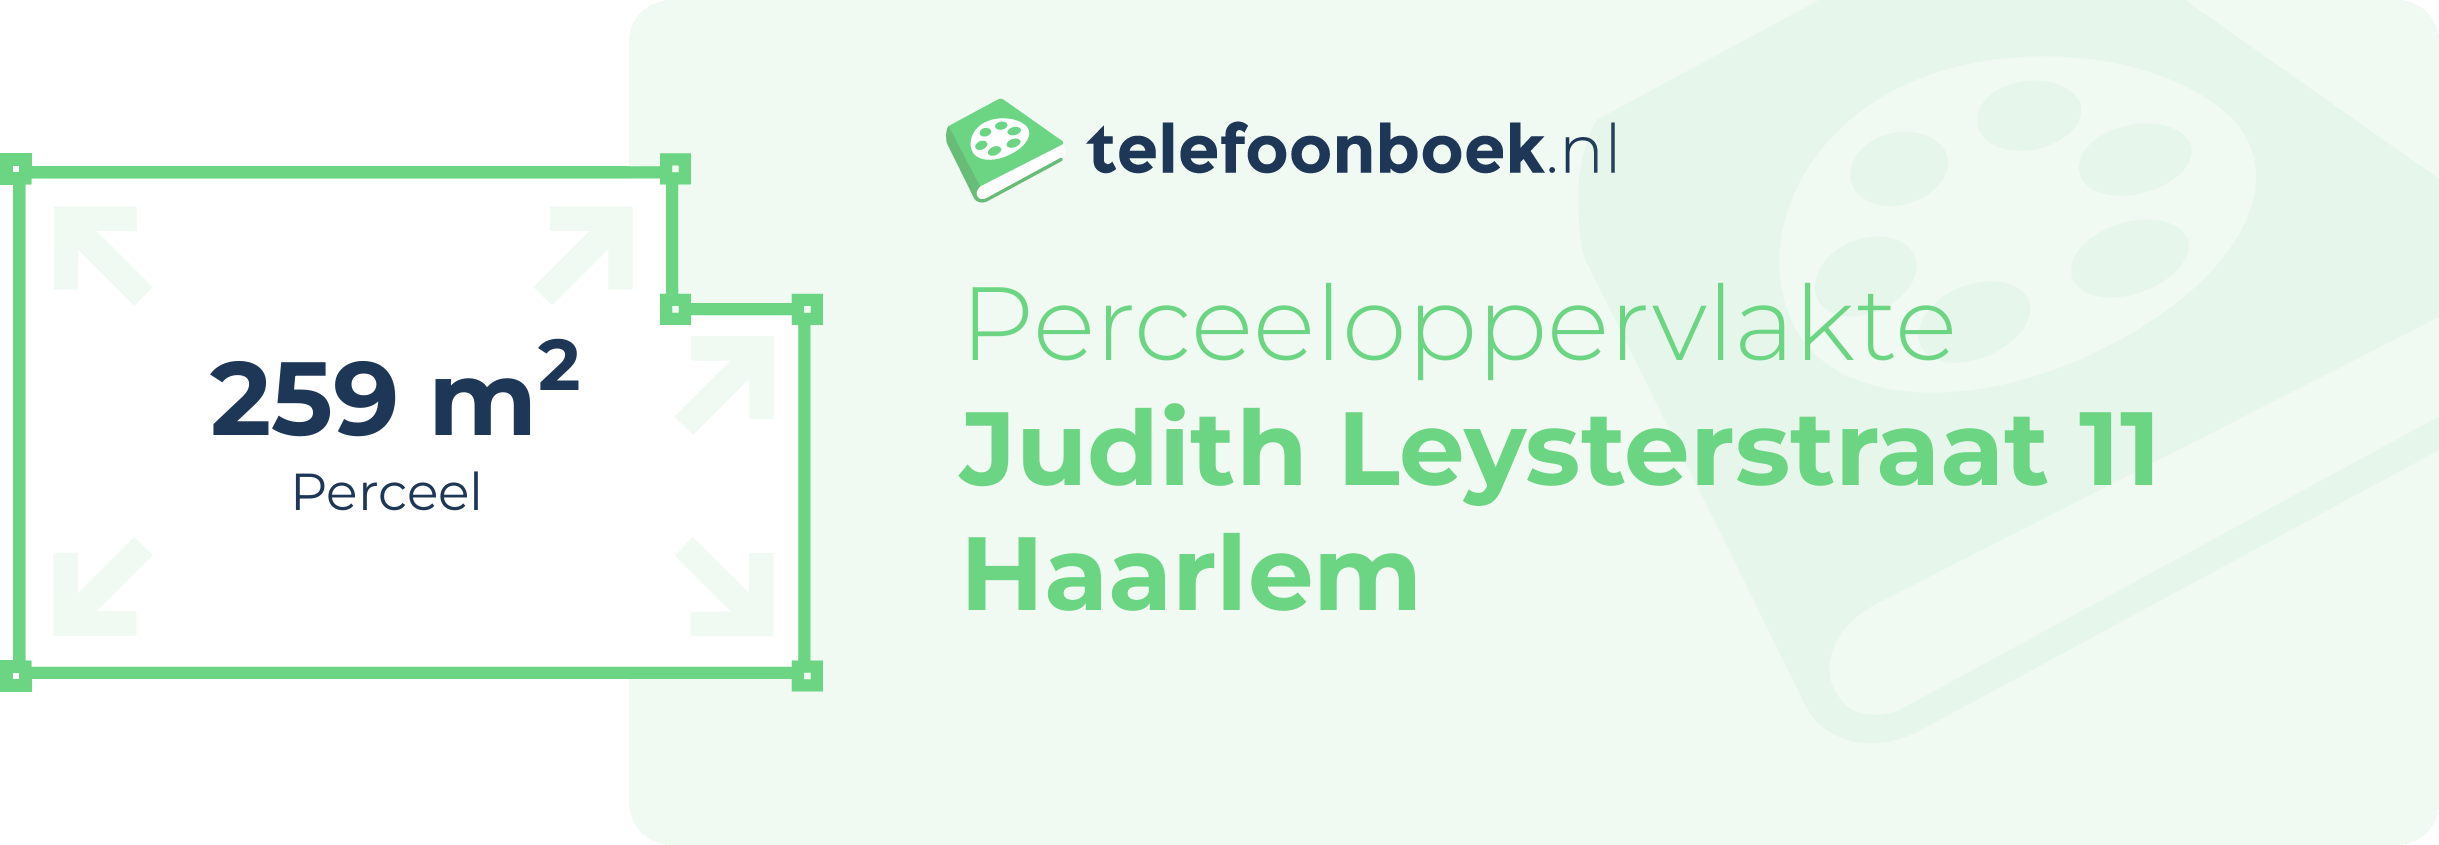 Perceeloppervlakte Judith Leysterstraat 11 Haarlem